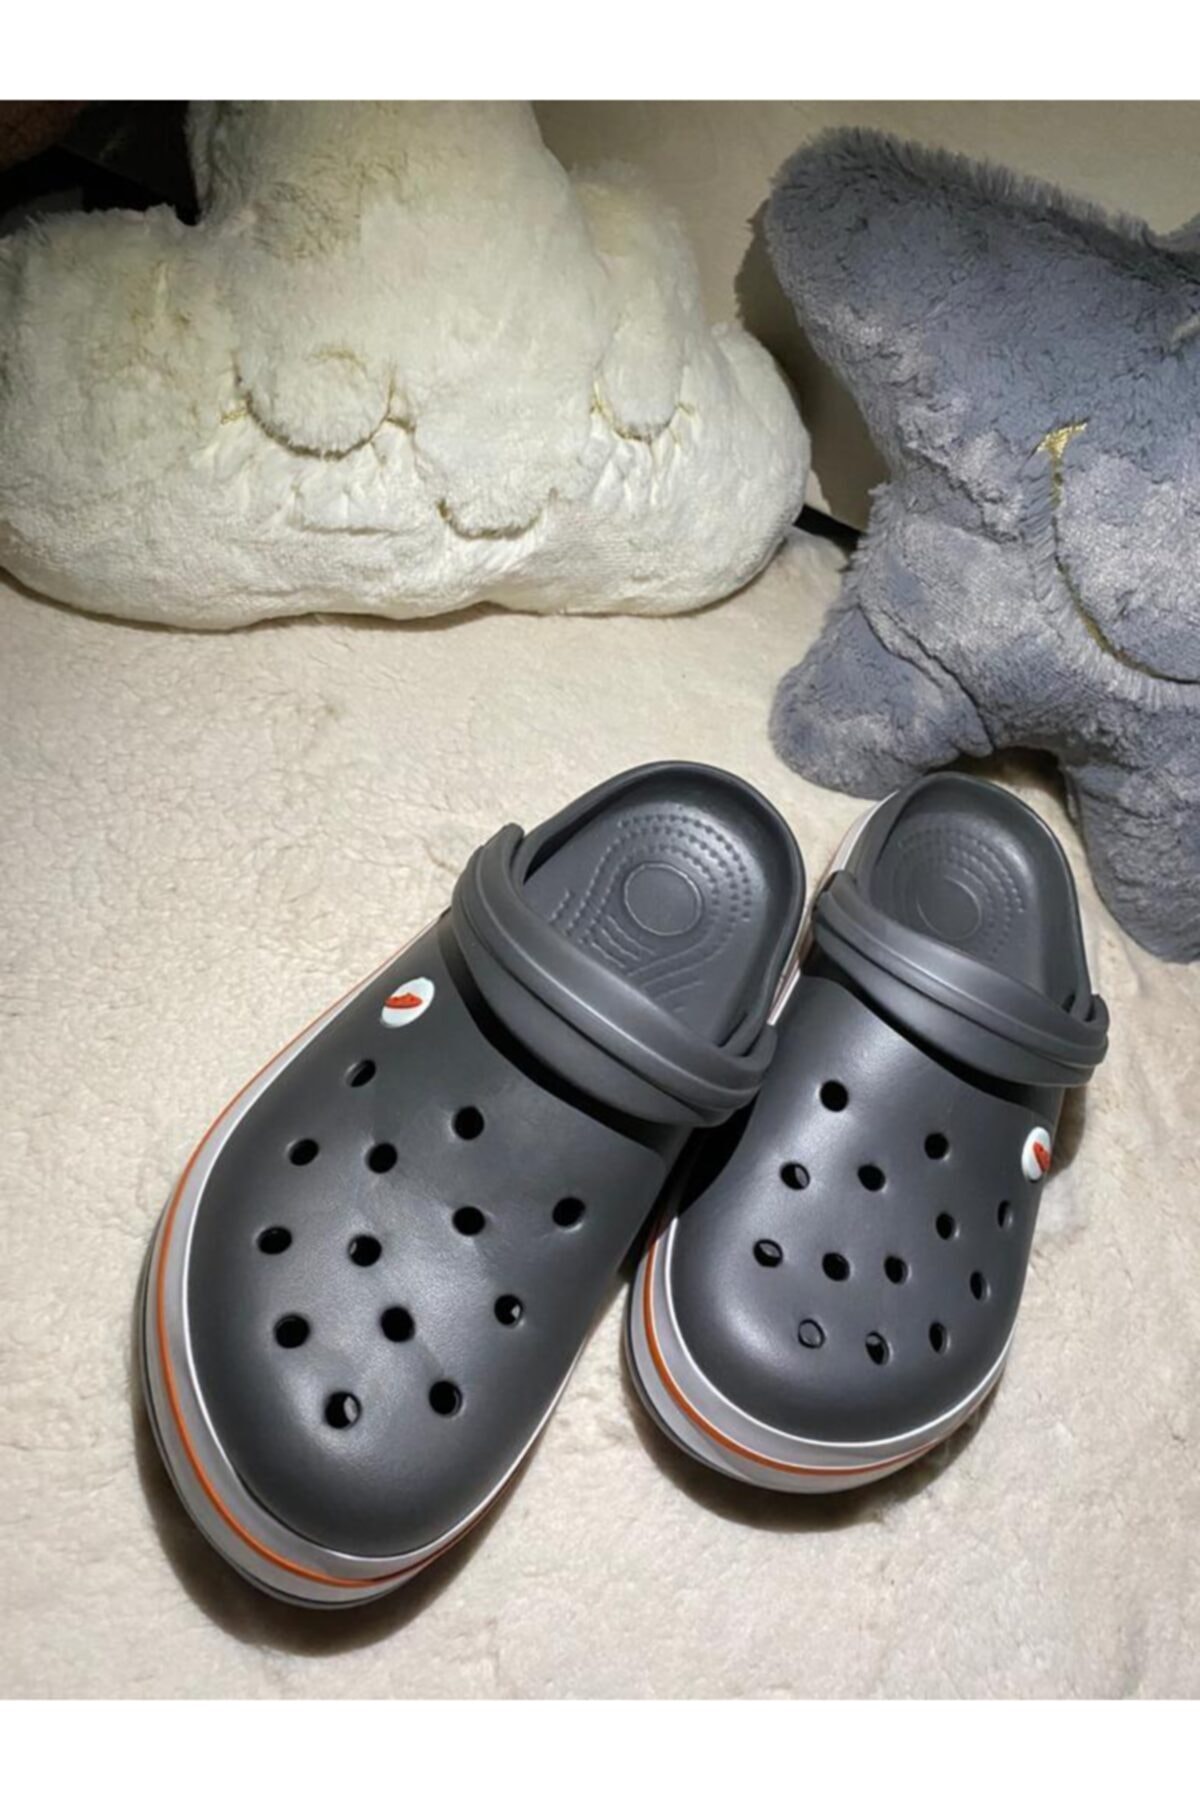 Black medical leather men's toe slippers for foot comfort-saigonsouth.com.vn